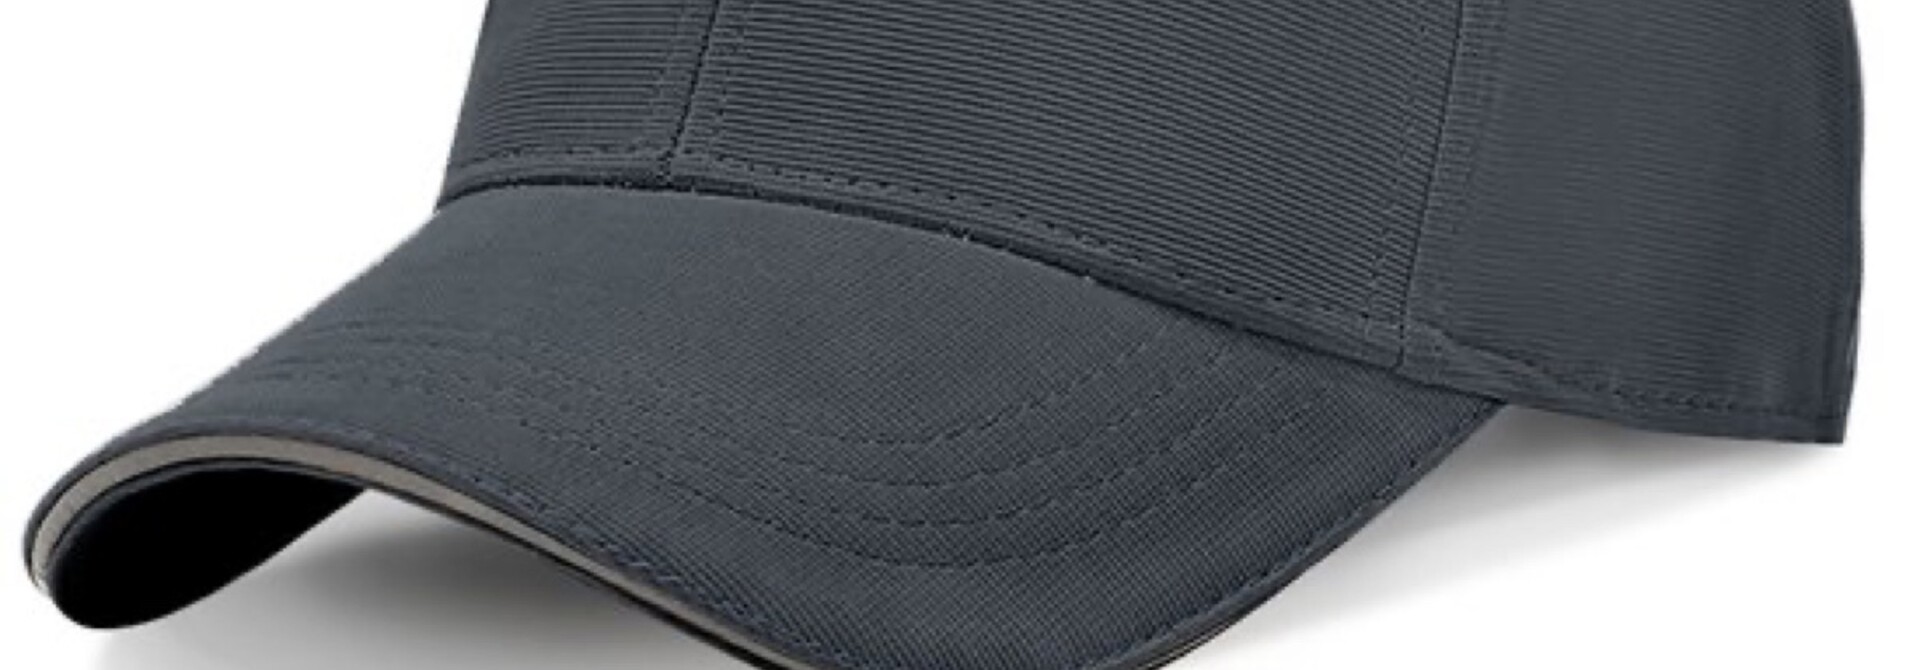 Baseballkappe für Männer und Frauen - Mit Reflektierendem Rand - Trucker Cap - Kopfumfang 55-60 CM  - Grau